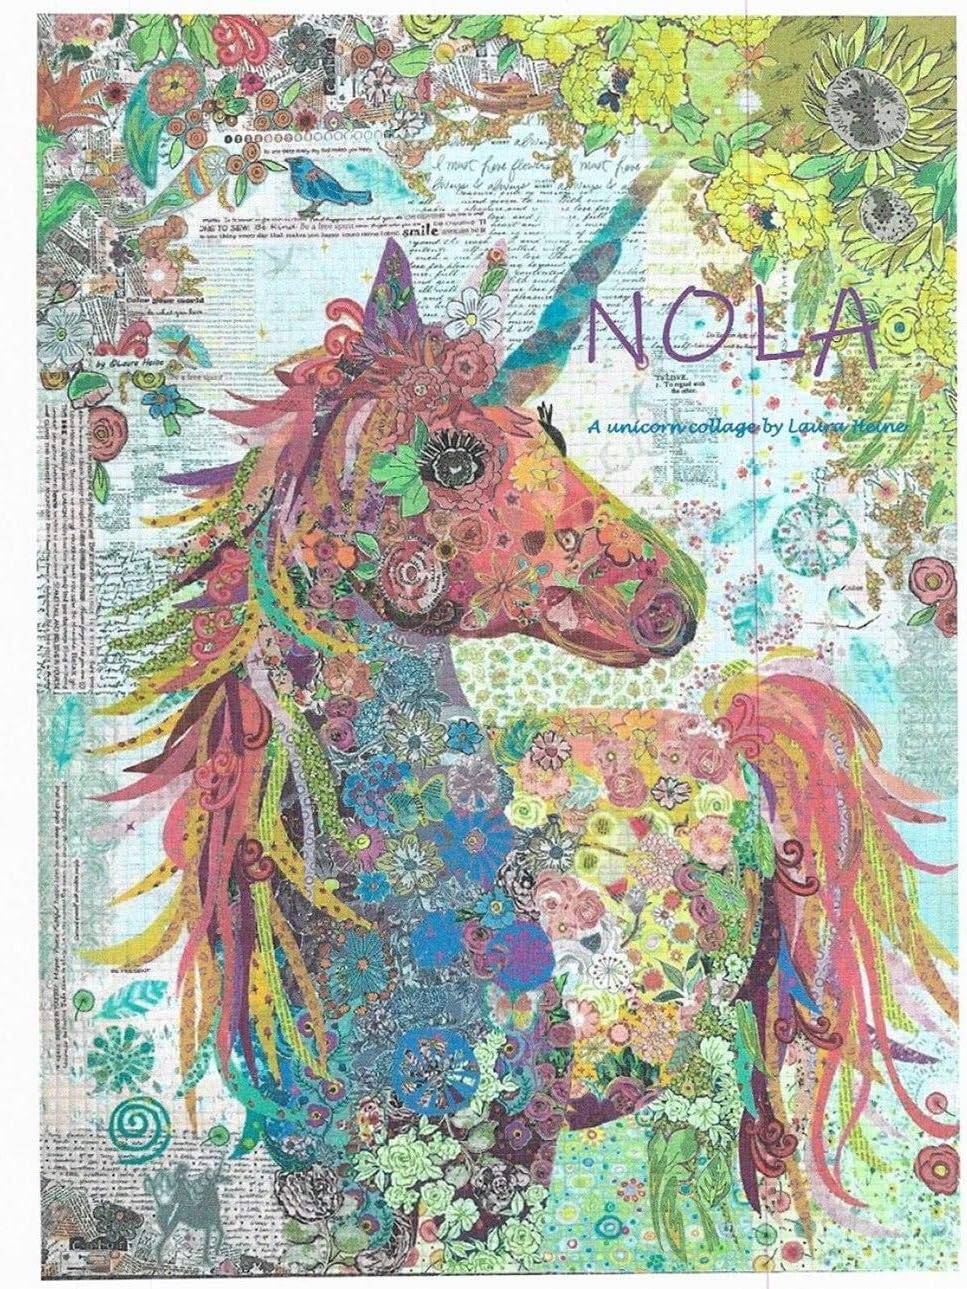 nola the unicorn collage quilt patterns